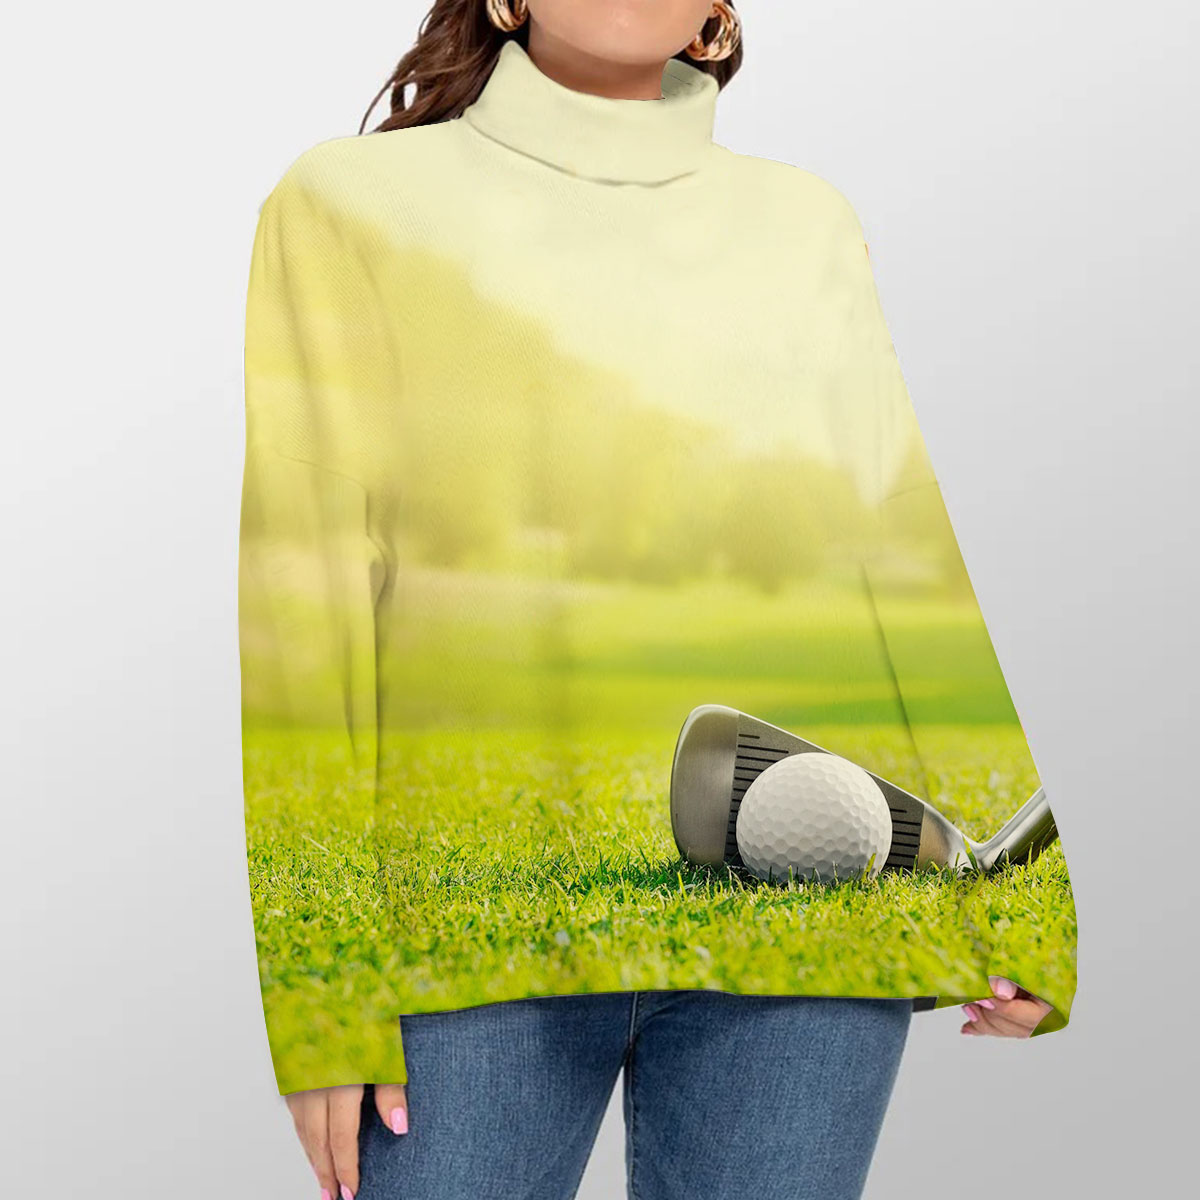 Golf Tools On Grass Turtleneck Sweater